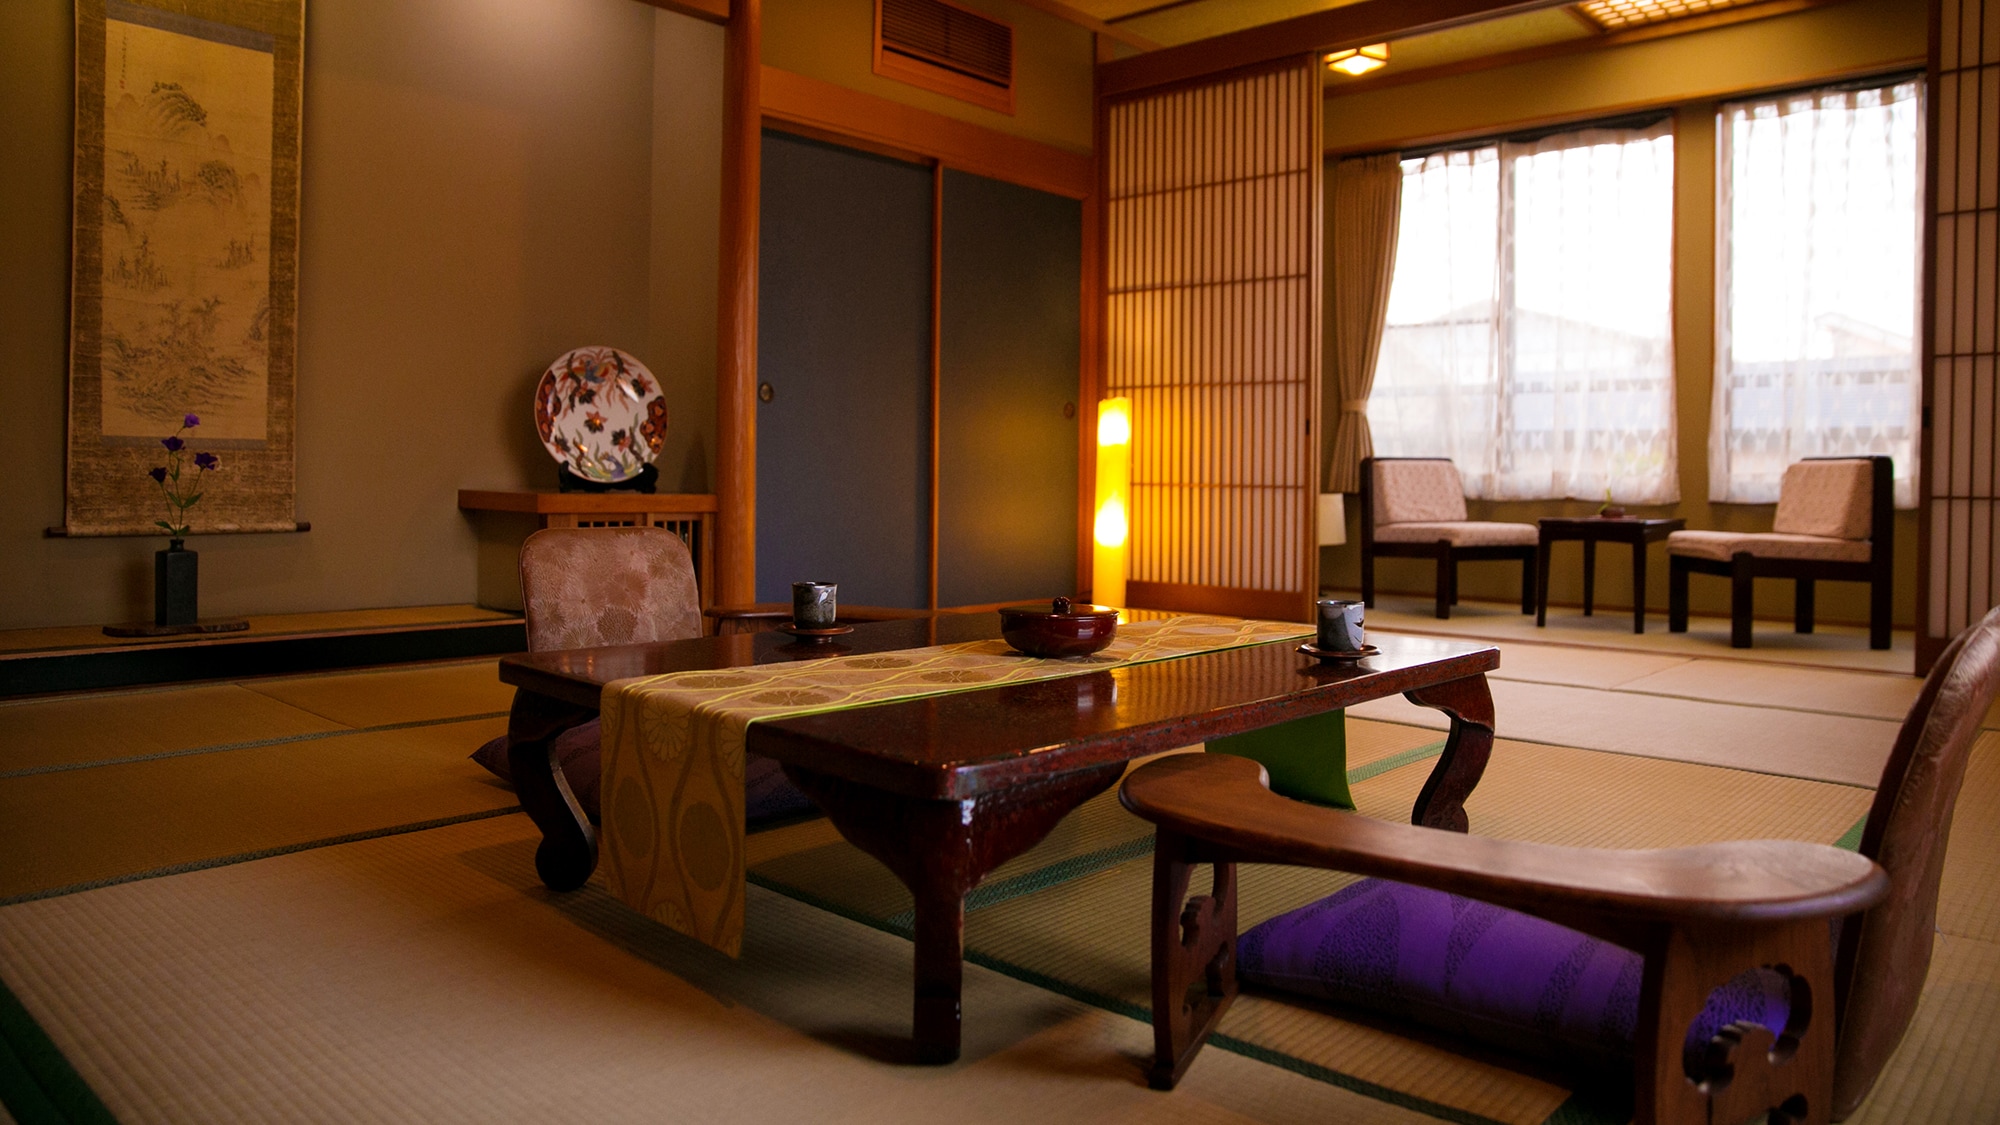 ◆ Japanese-style room 15 tatami mats ◆